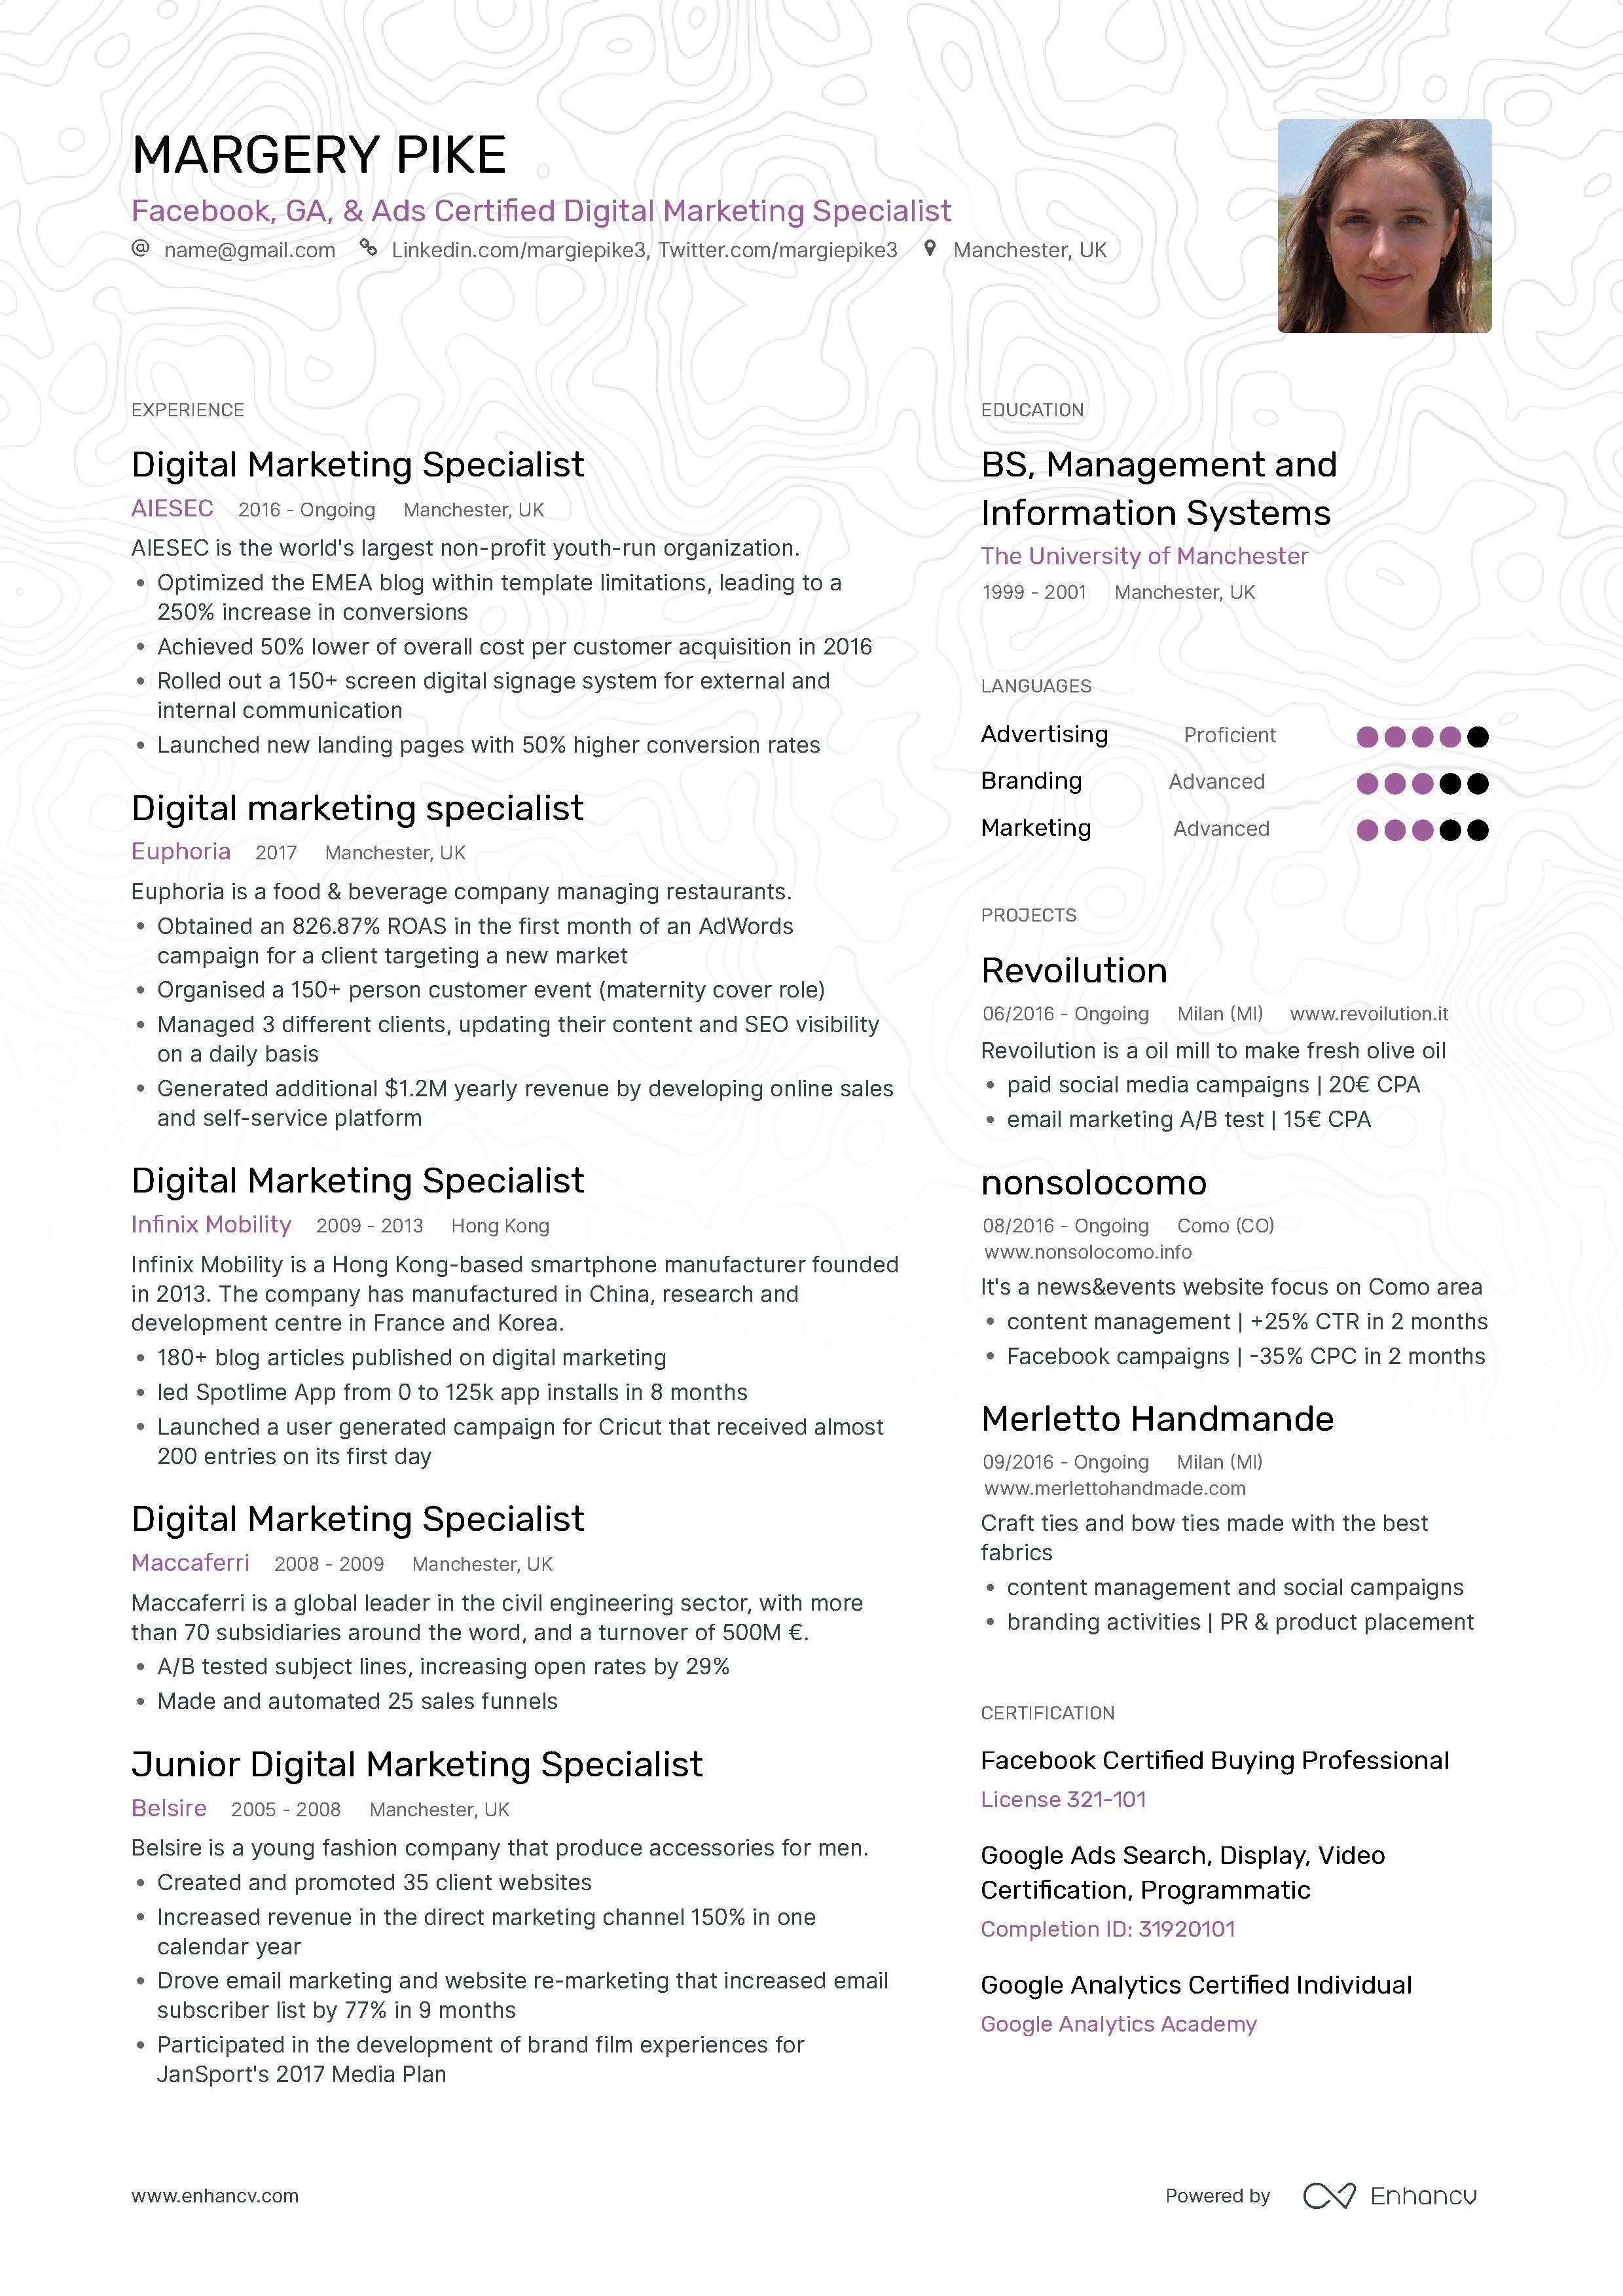 Digital marketing specialist resume examples & expert tips